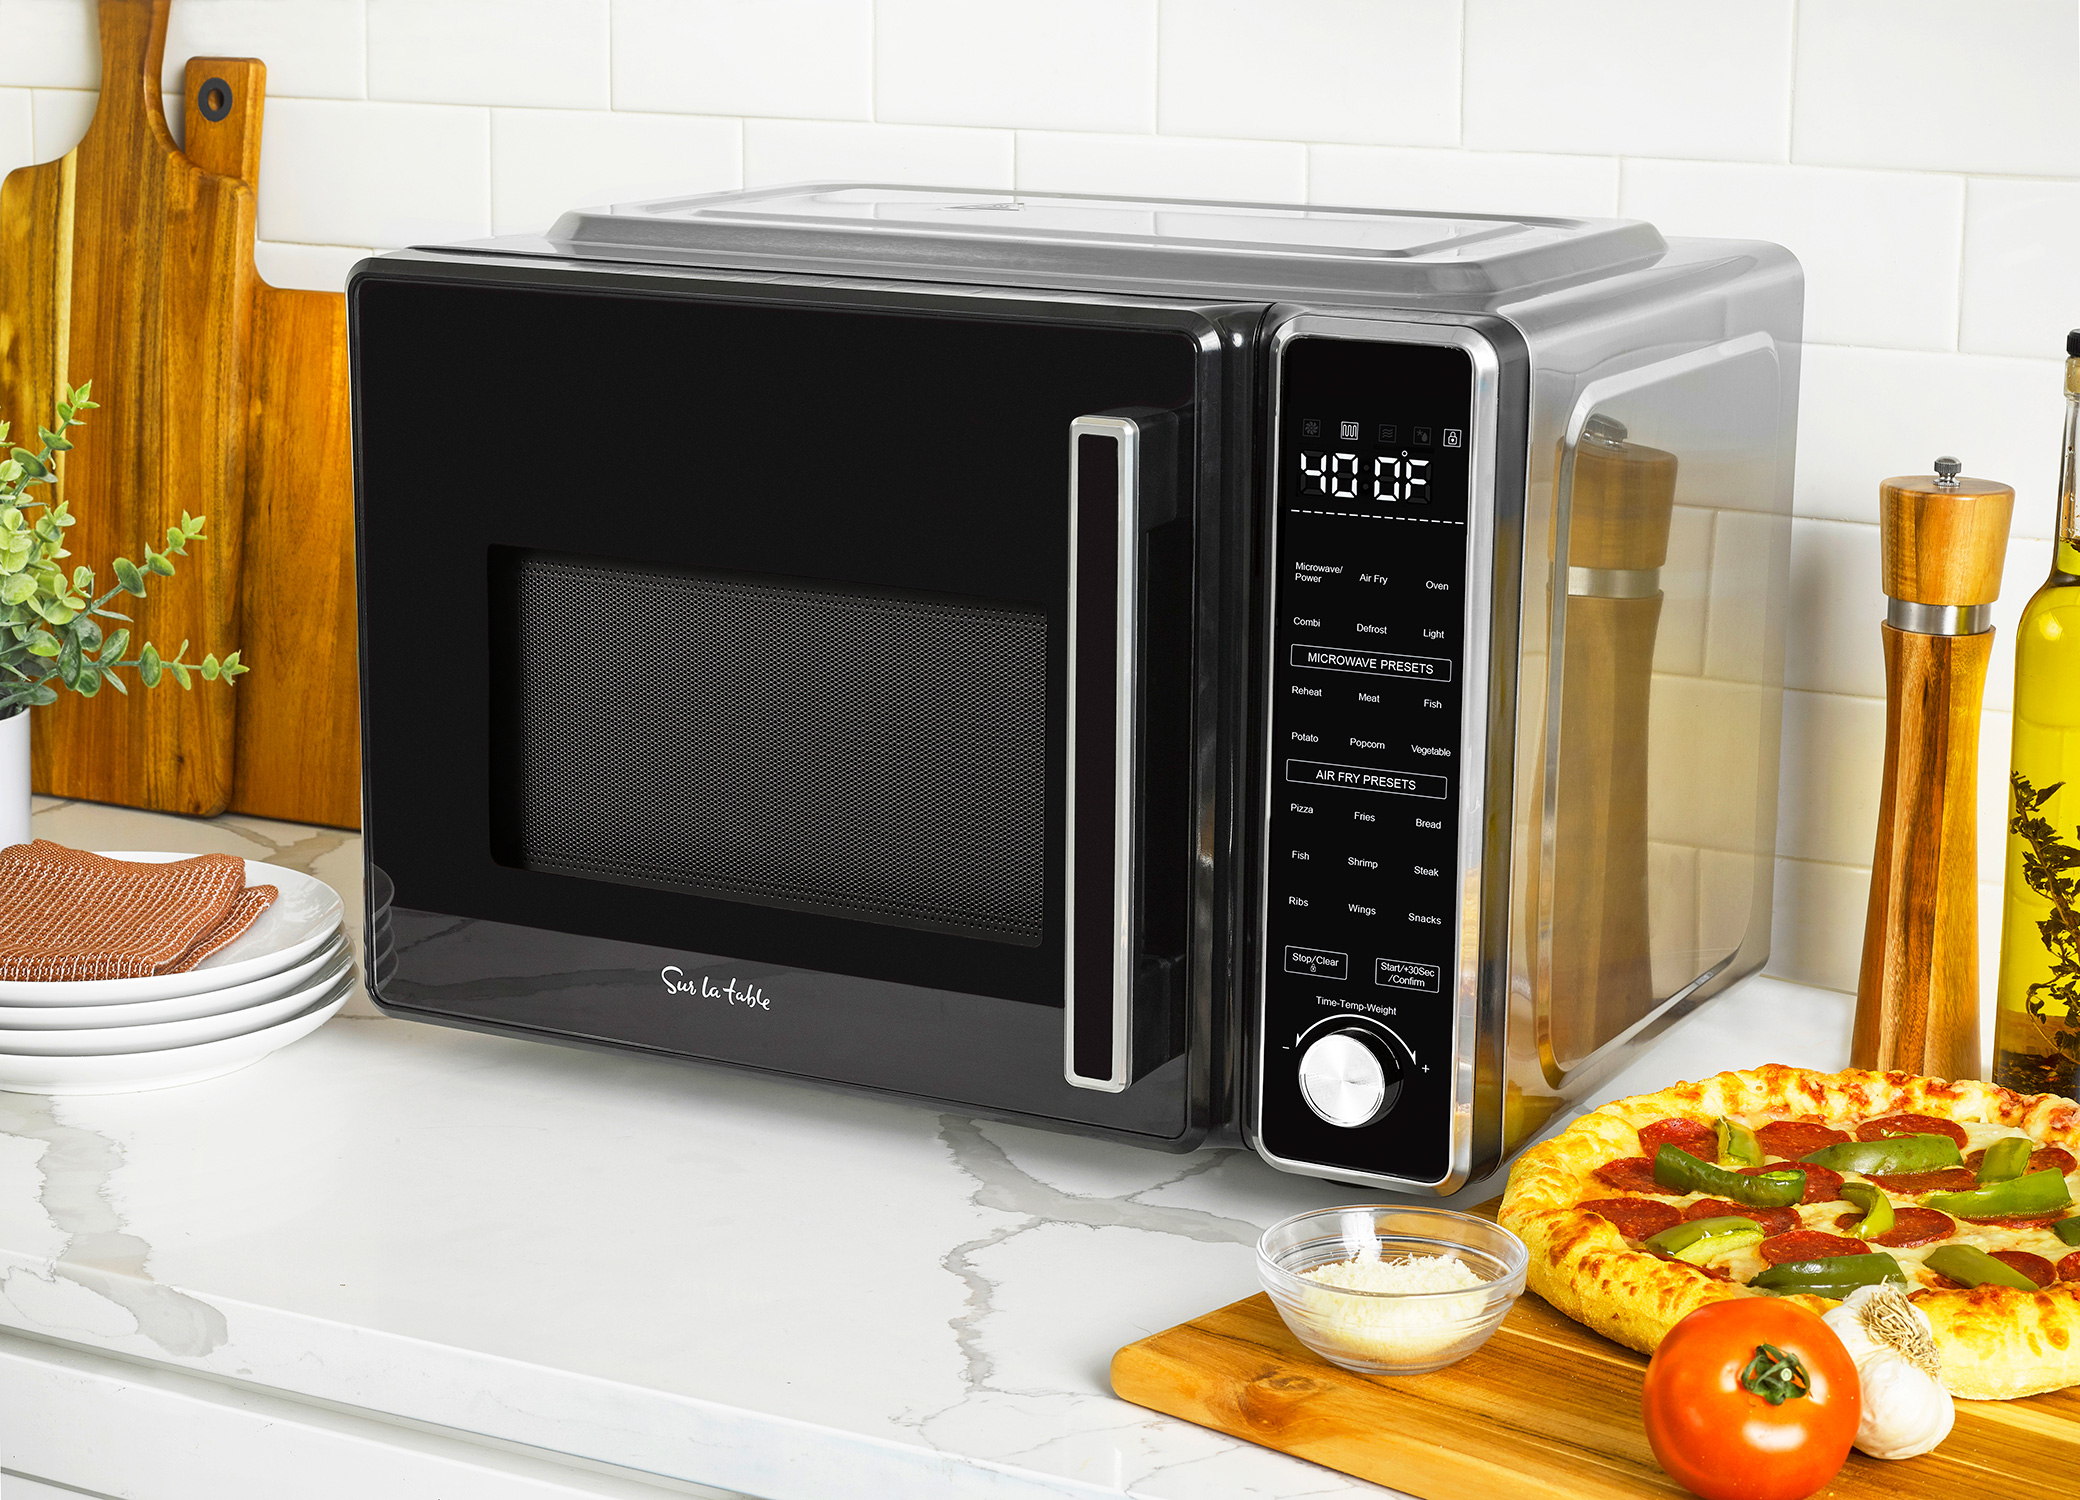 Sur La Table Microwave Air Fryer Oven - appliances - by owner